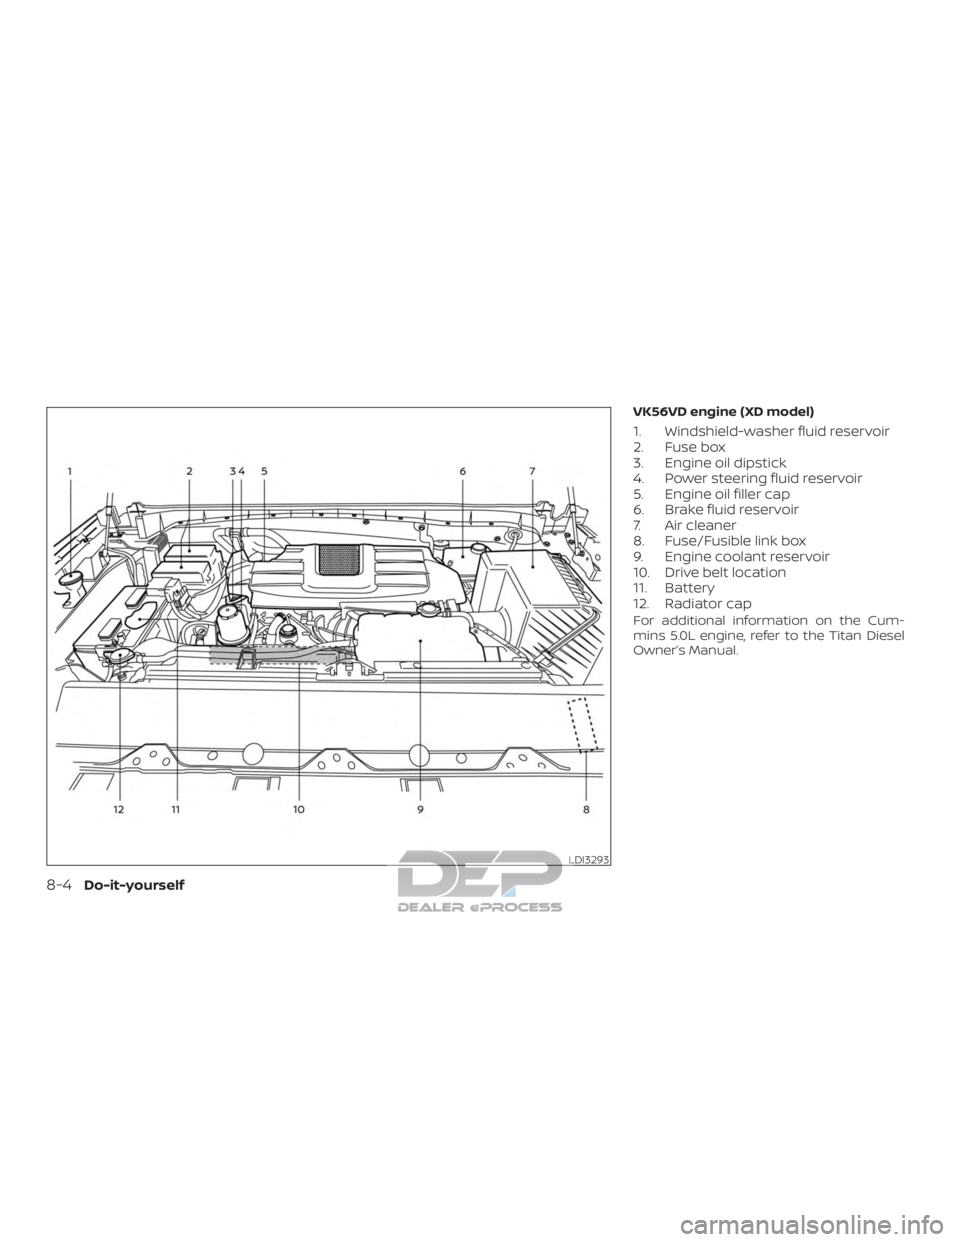 NISSAN TITAN 2019  Owner´s Manual VK56VD engine (XD model)
1. Windshield-washer fluid reservoir
2. Fuse box
3. Engine oil dipstick
4. Power steering fluid reservoir
5. Engine oil filler cap
6. Brake fluid reservoir
7. Air cleaner
8. F